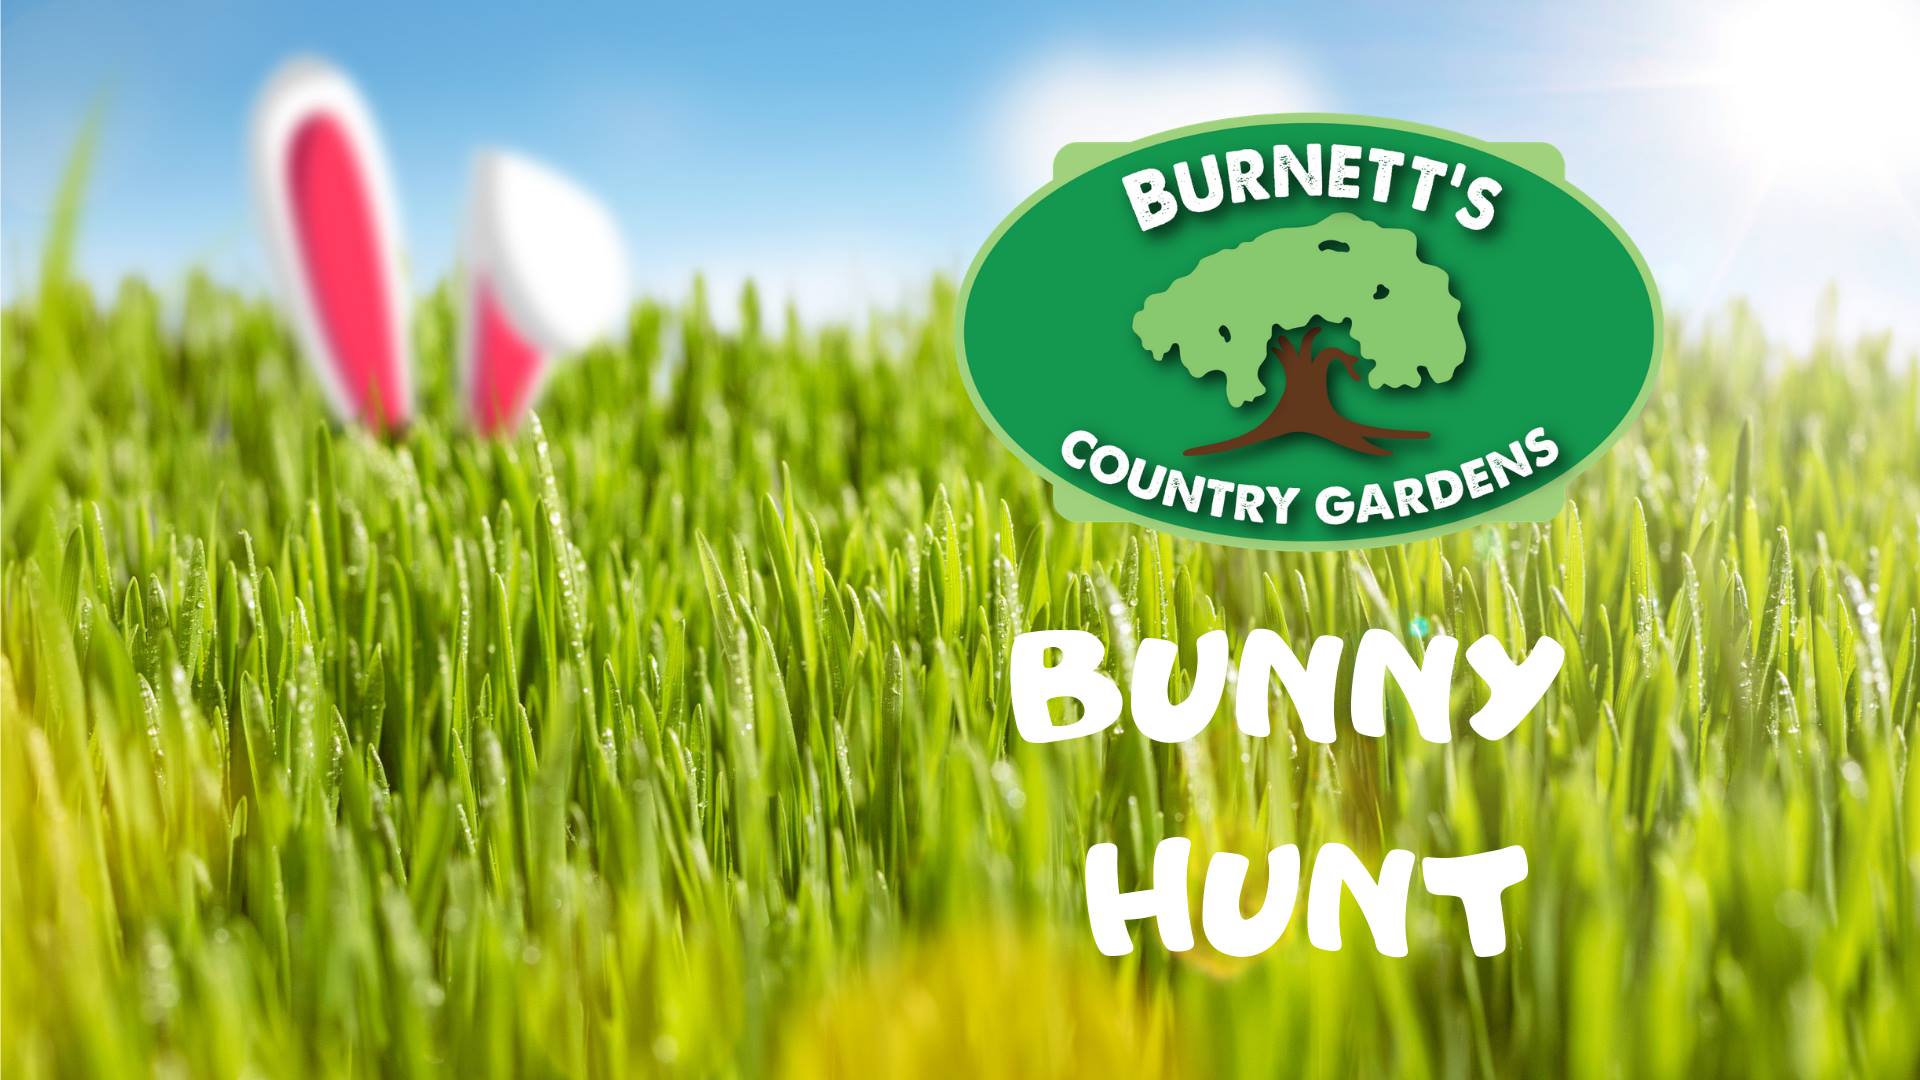 Annual Burnett's Country Gardens Bunnies Hunt